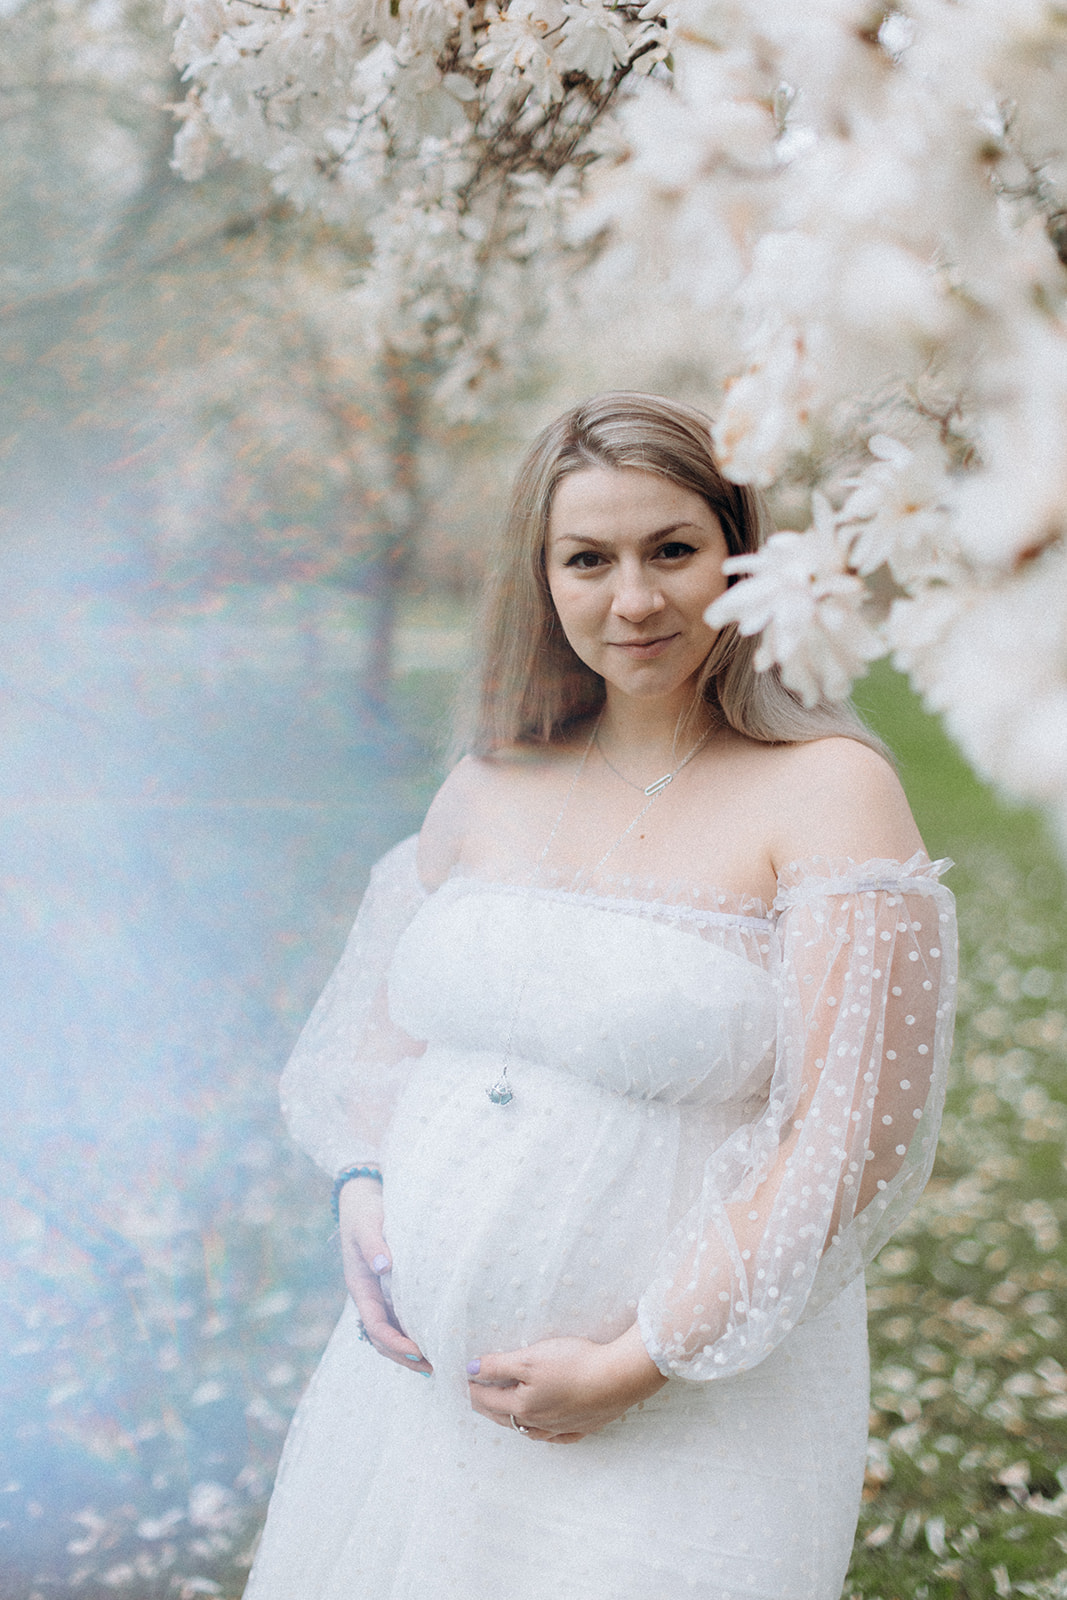 White blooming magnolias framing maternity portrait of pregnant girl in white dress